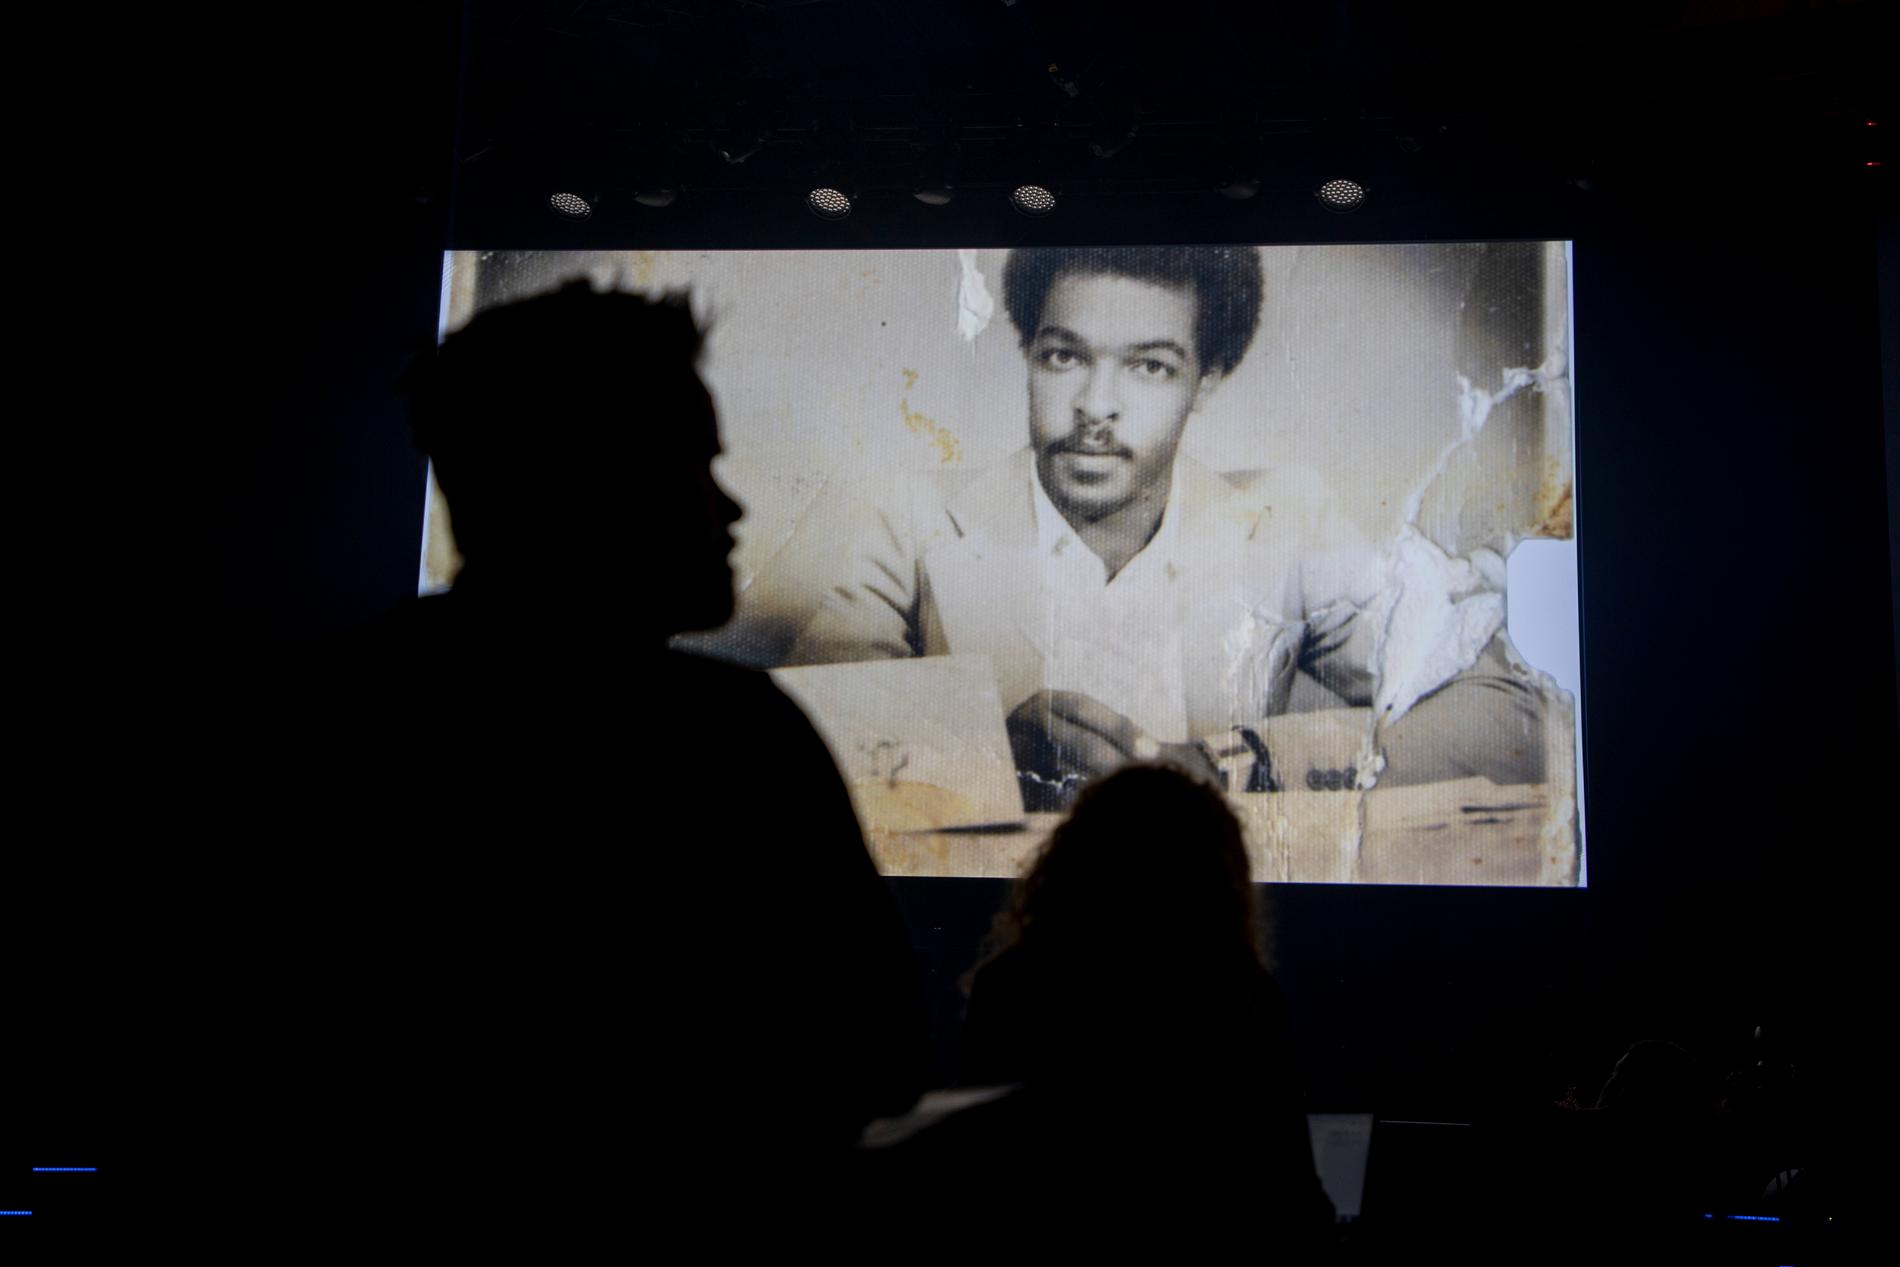 På dagen 20 år efter Dawit Isaaks gripande invigdes årets Bokmässa i Göteborg.